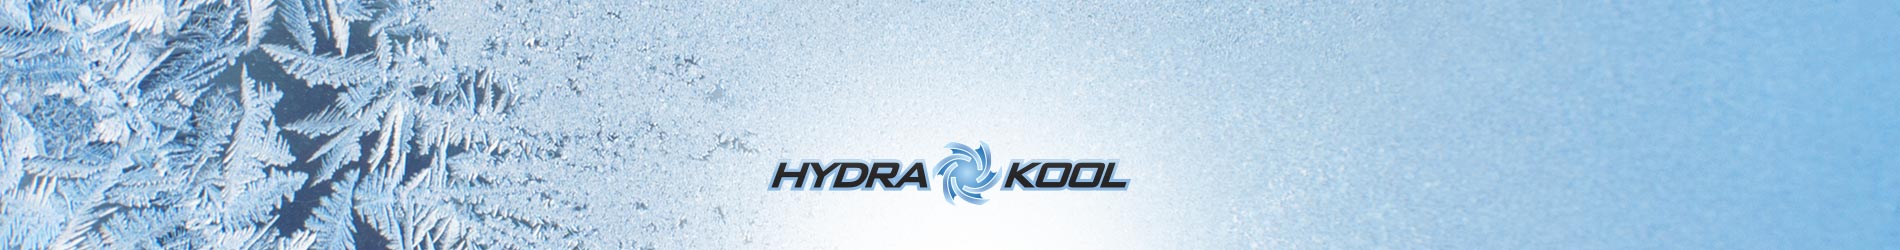 hydra-kool-header